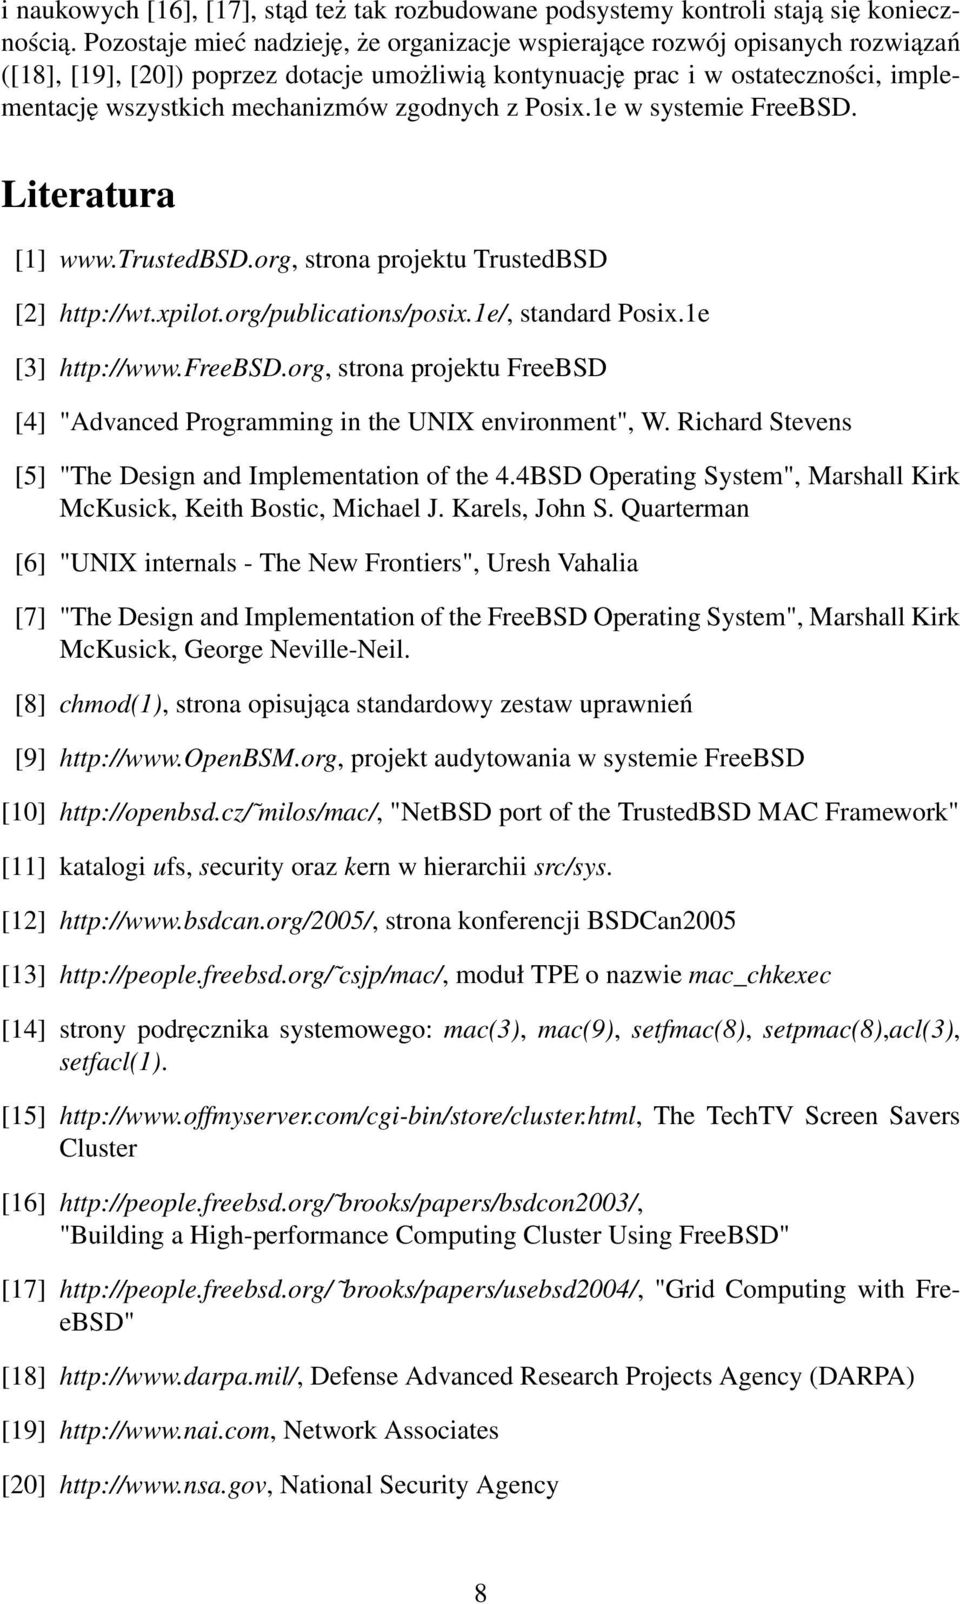 zgodnych z Posix.1e w systemie FreeBSD. Literatura [1] www.trustedbsd.org, strona projektu TrustedBSD [2] http://wt.xpilot.org/publications/posix.1e/, standard Posix.1e [3] http://www.freebsd.